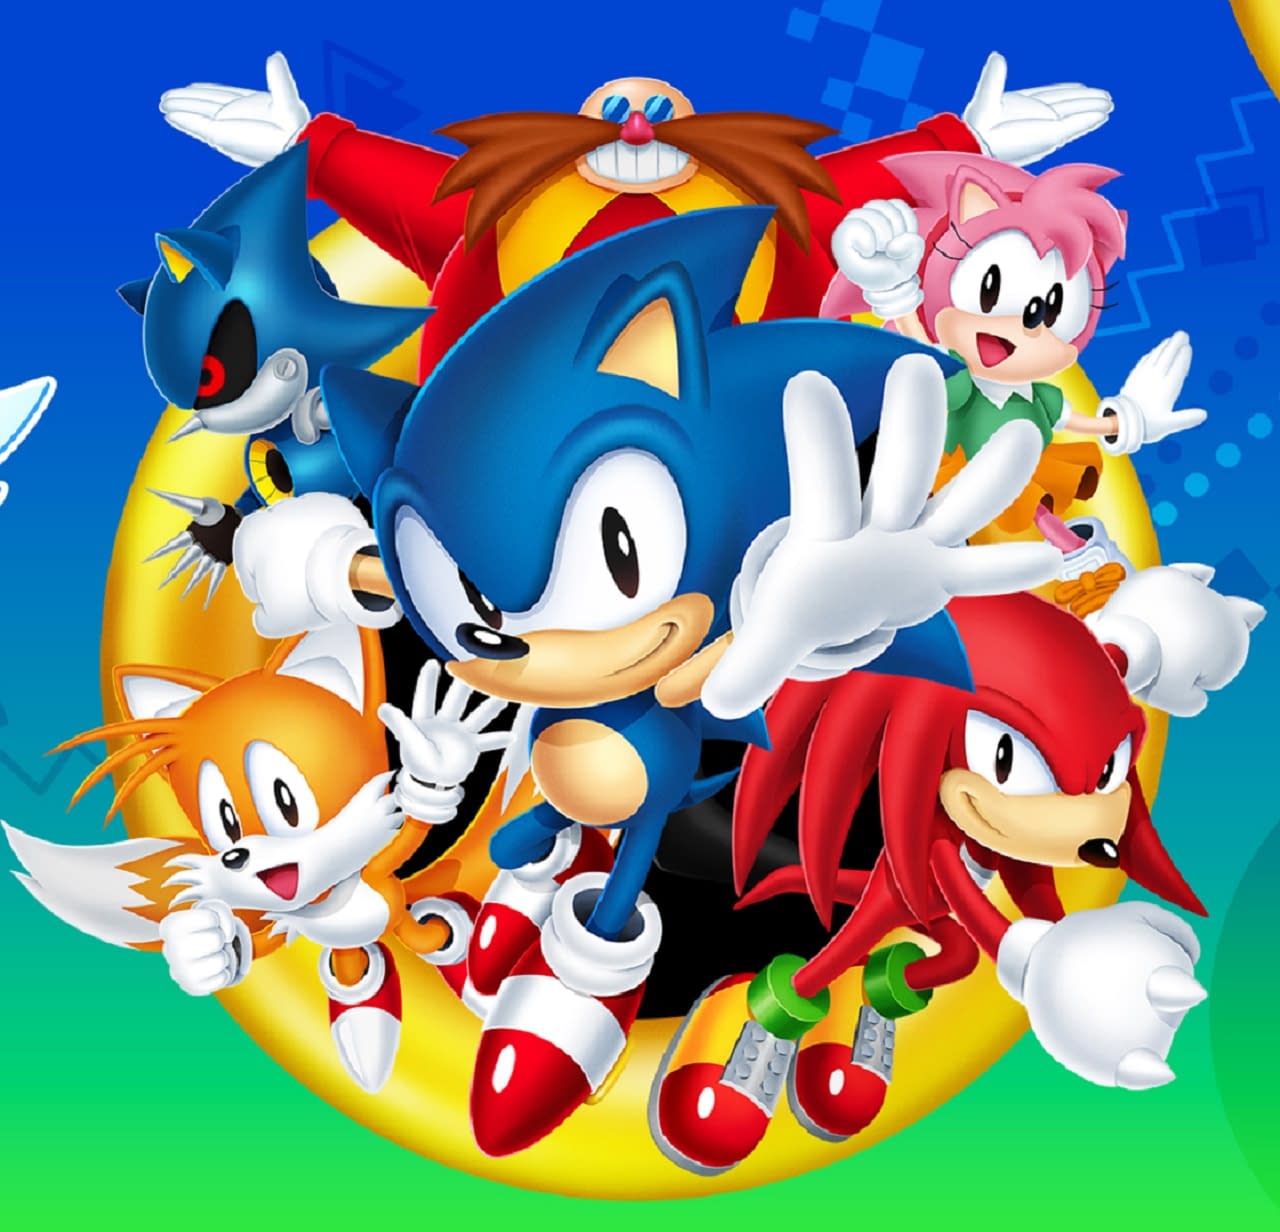 Sonic the Hedgehog 2006 PC - Sonic Retro